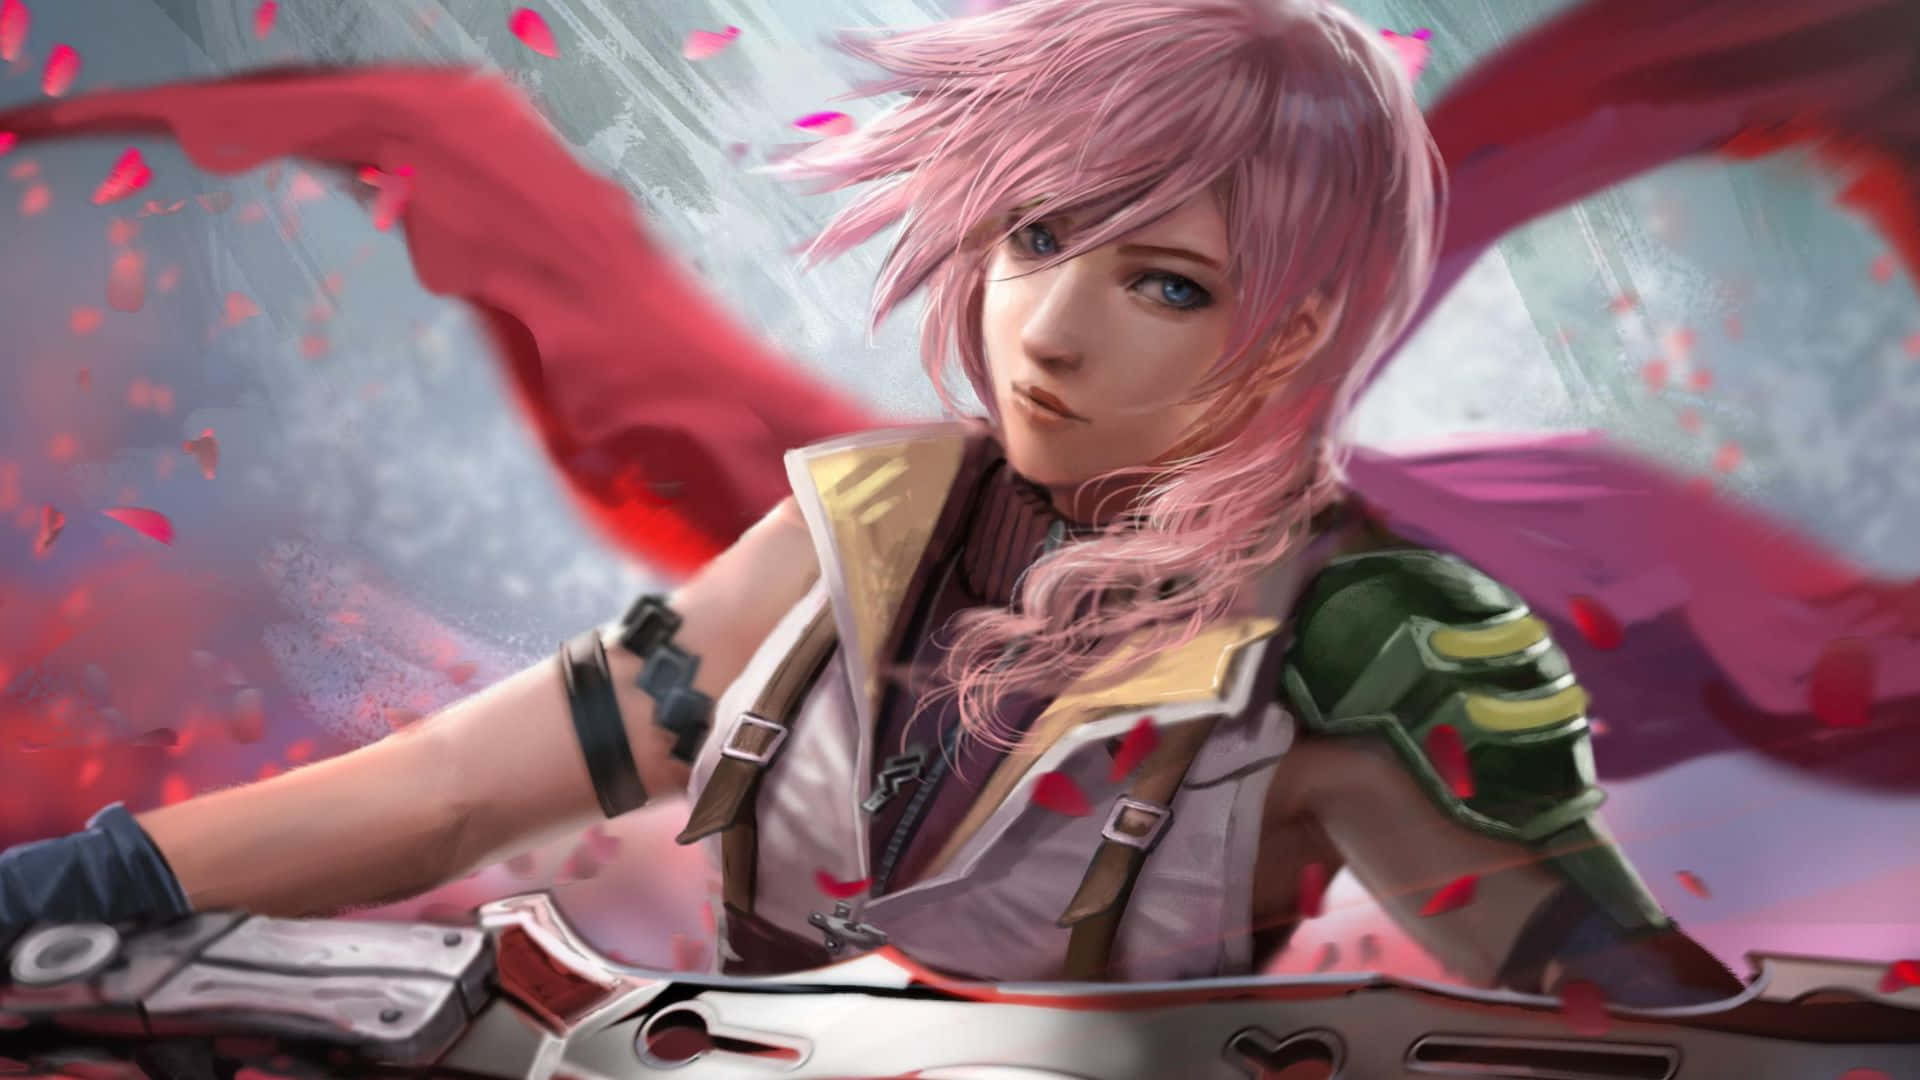 Lightning From Final Fantasy Xiii Profile Shot Wallpaper